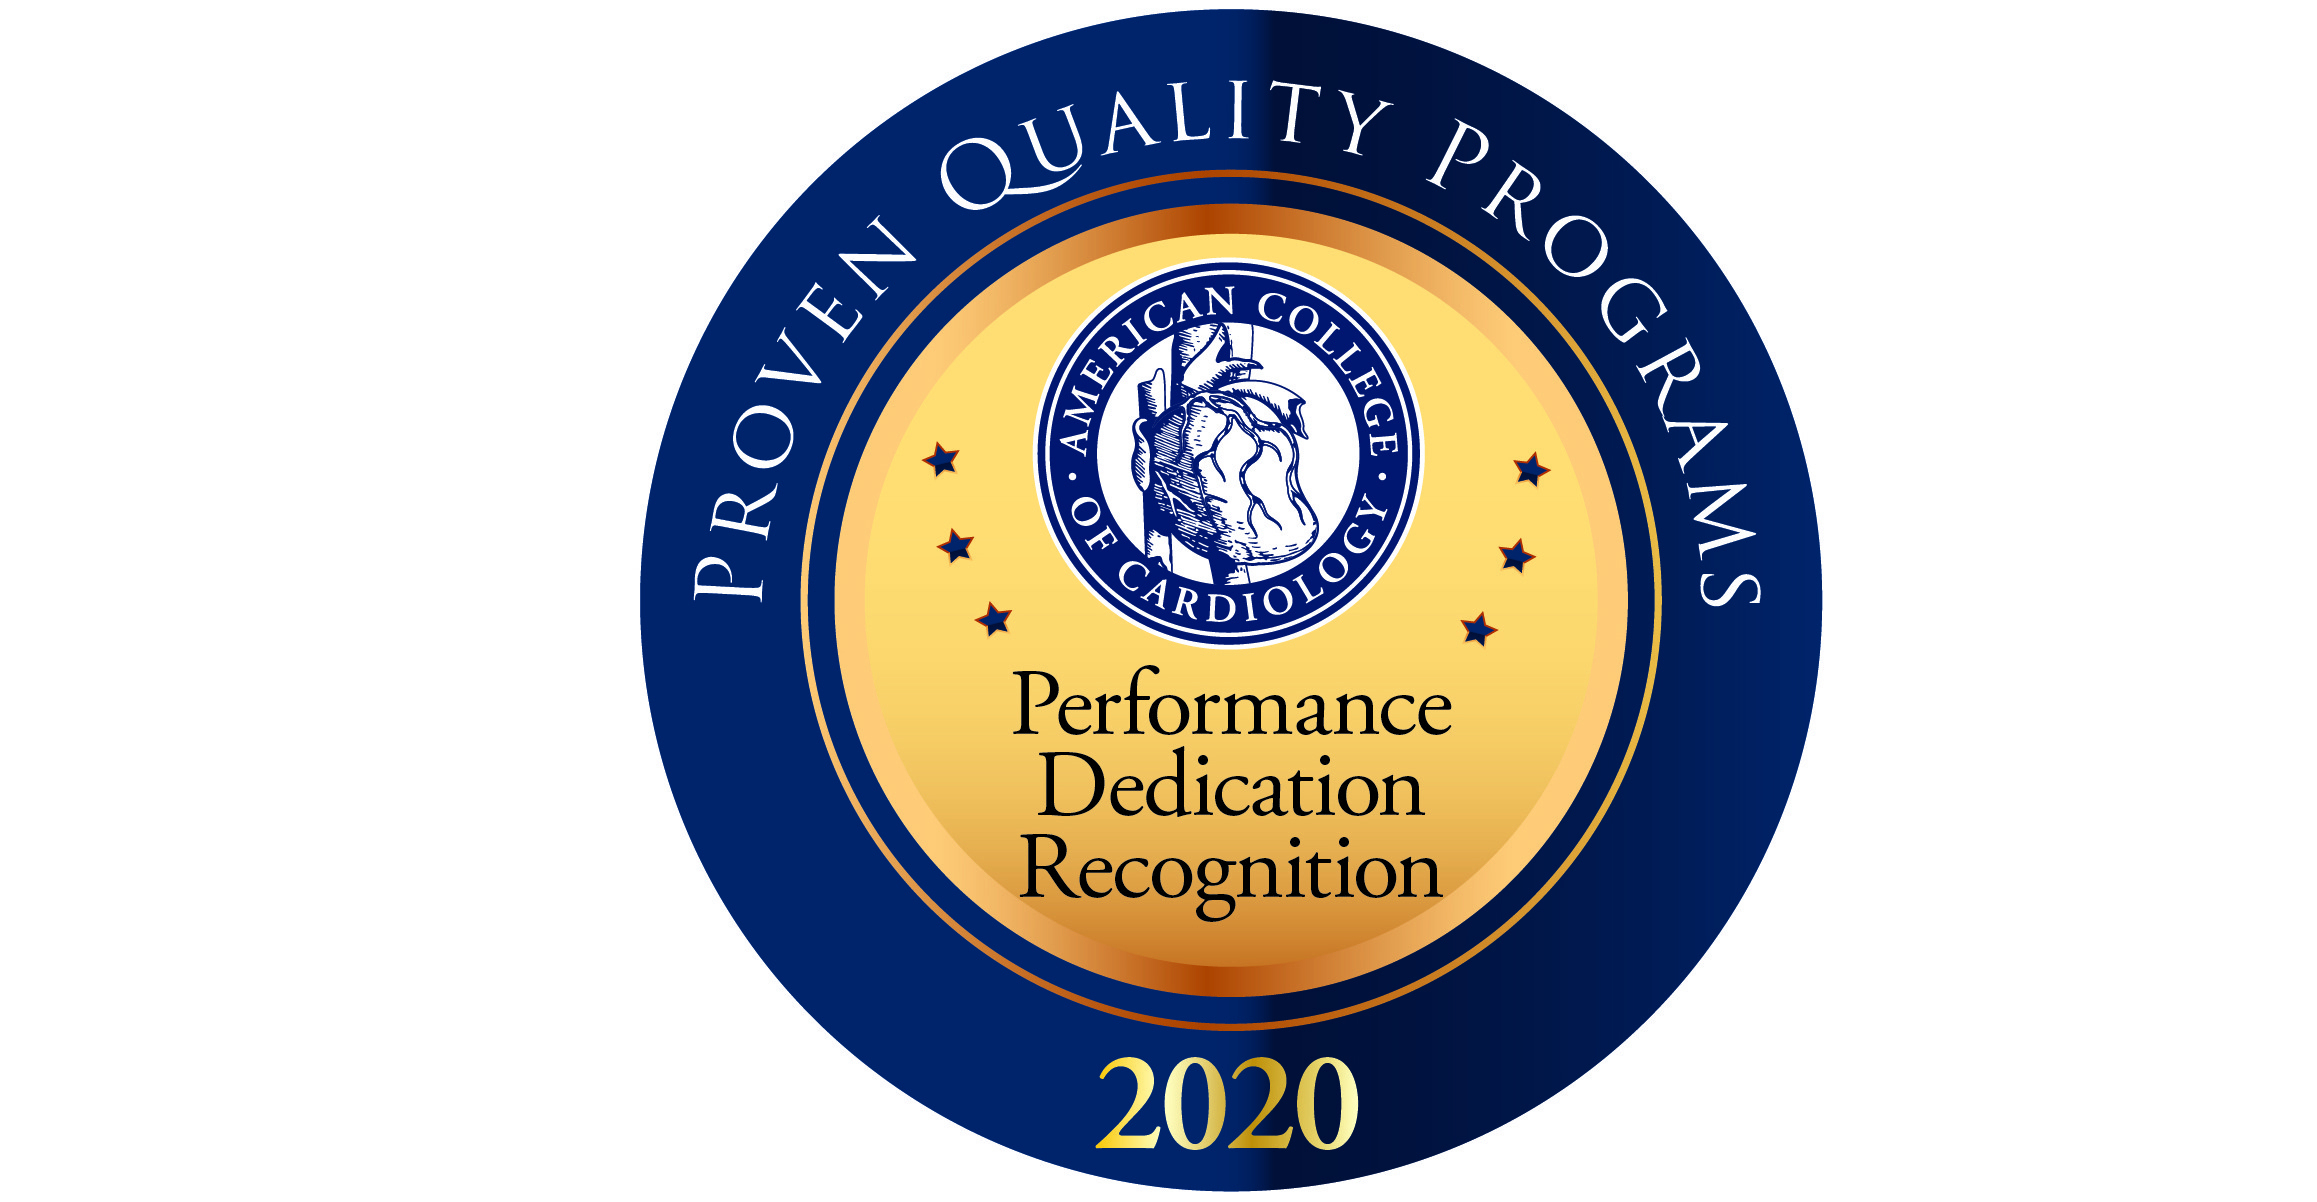 B19238_Health_Systems_Quality Award Badge_V1 Options encequiconcerne Inova Payroll Reviews 